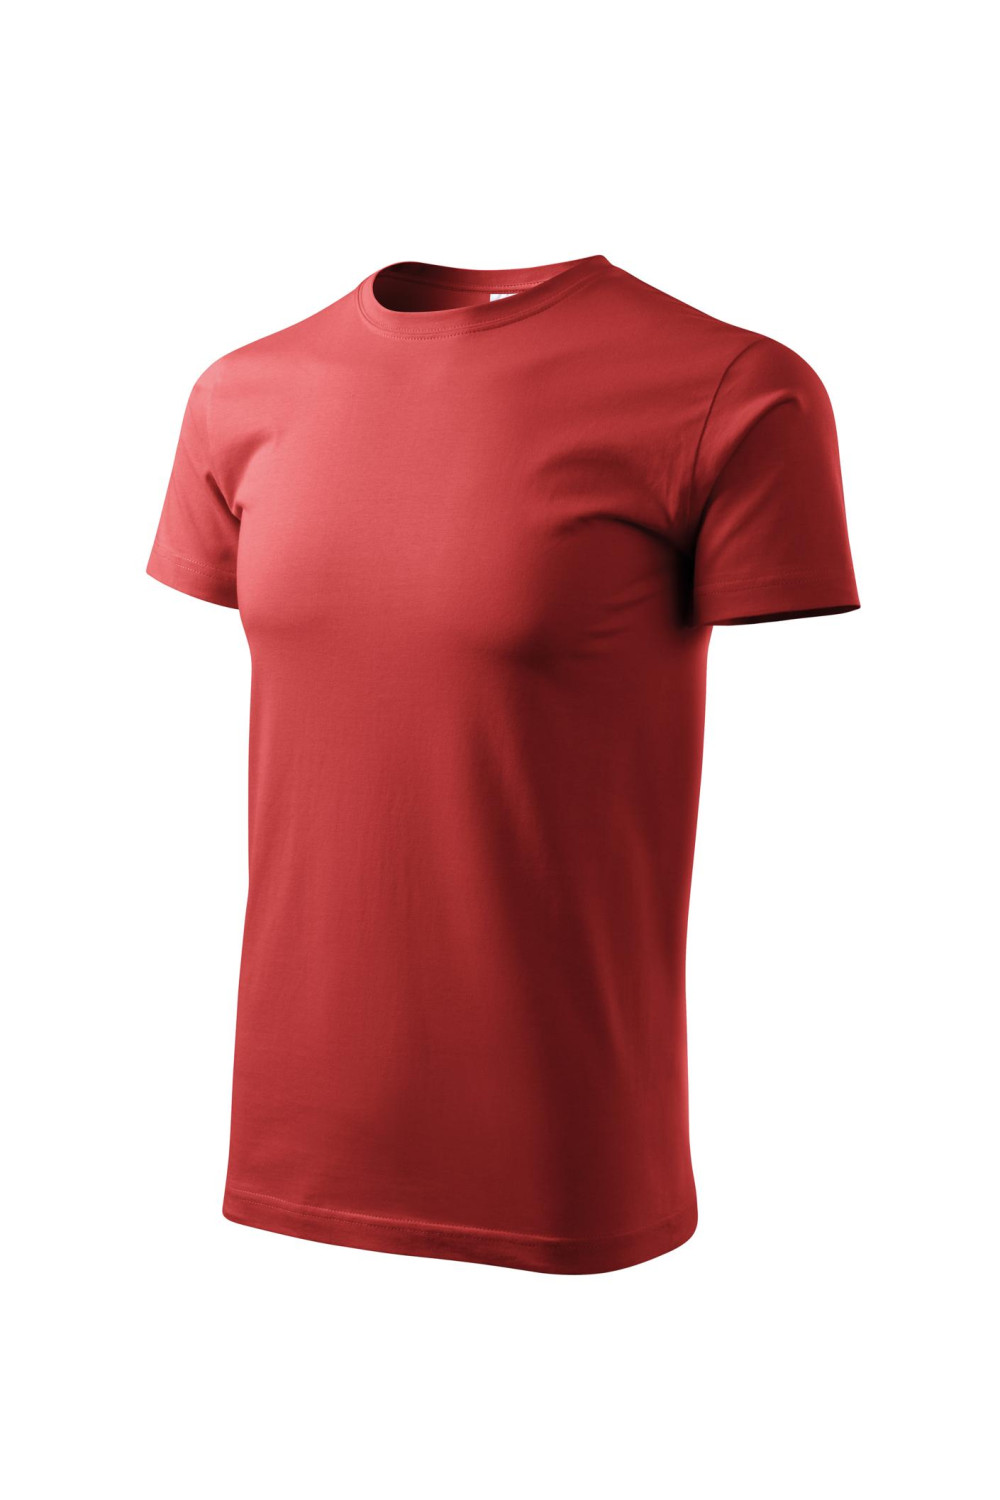 Koszulka męska 100% bawełna BASIC 129  kolor bordowy